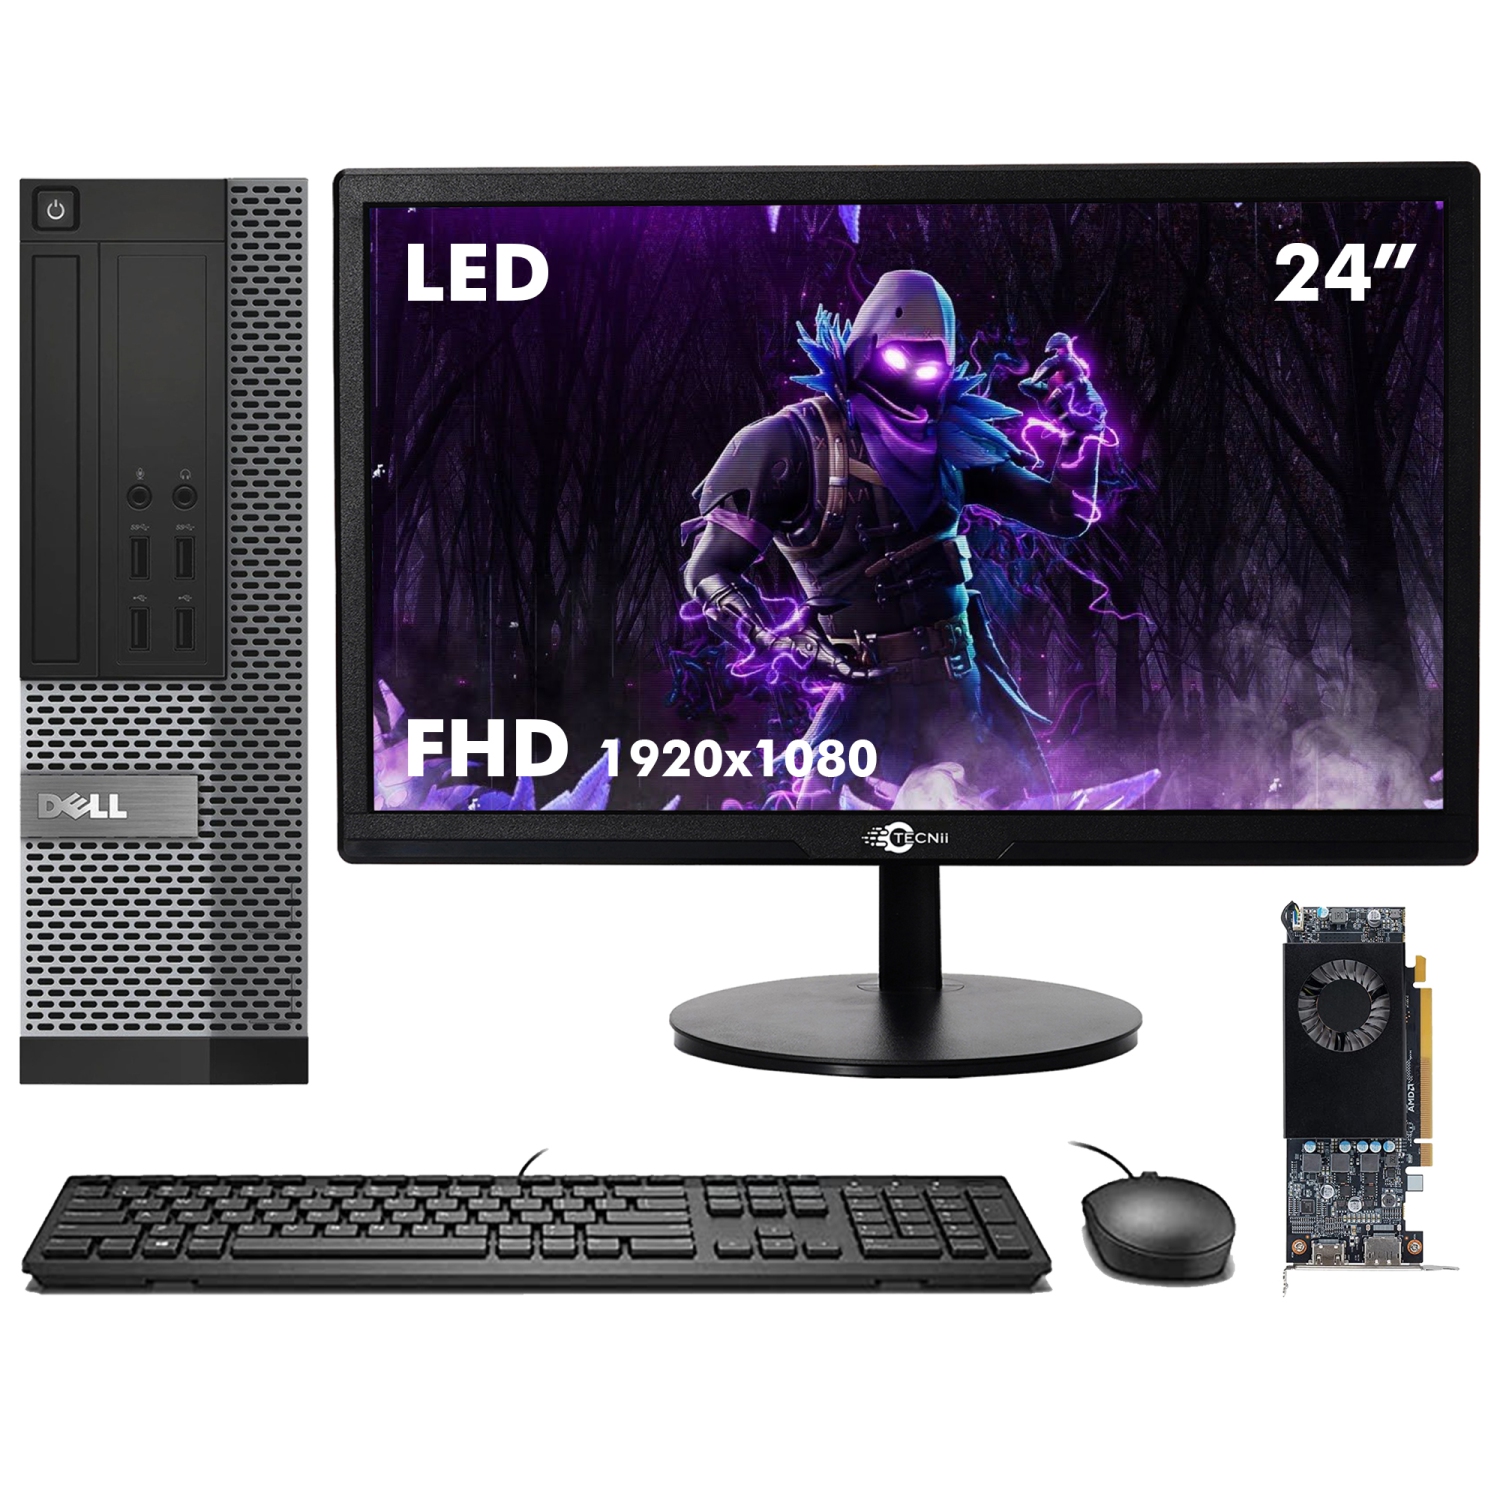 (Refurbished Good)-Dell Gaming PC with 24" Monitor|AMD Radeon RX 550 4GB Graphics Card|Intel i7 Processor|1TB SSD Storage 32GB Memory |Windows 10 Pro|New Keyboard & Mouse|Wifi